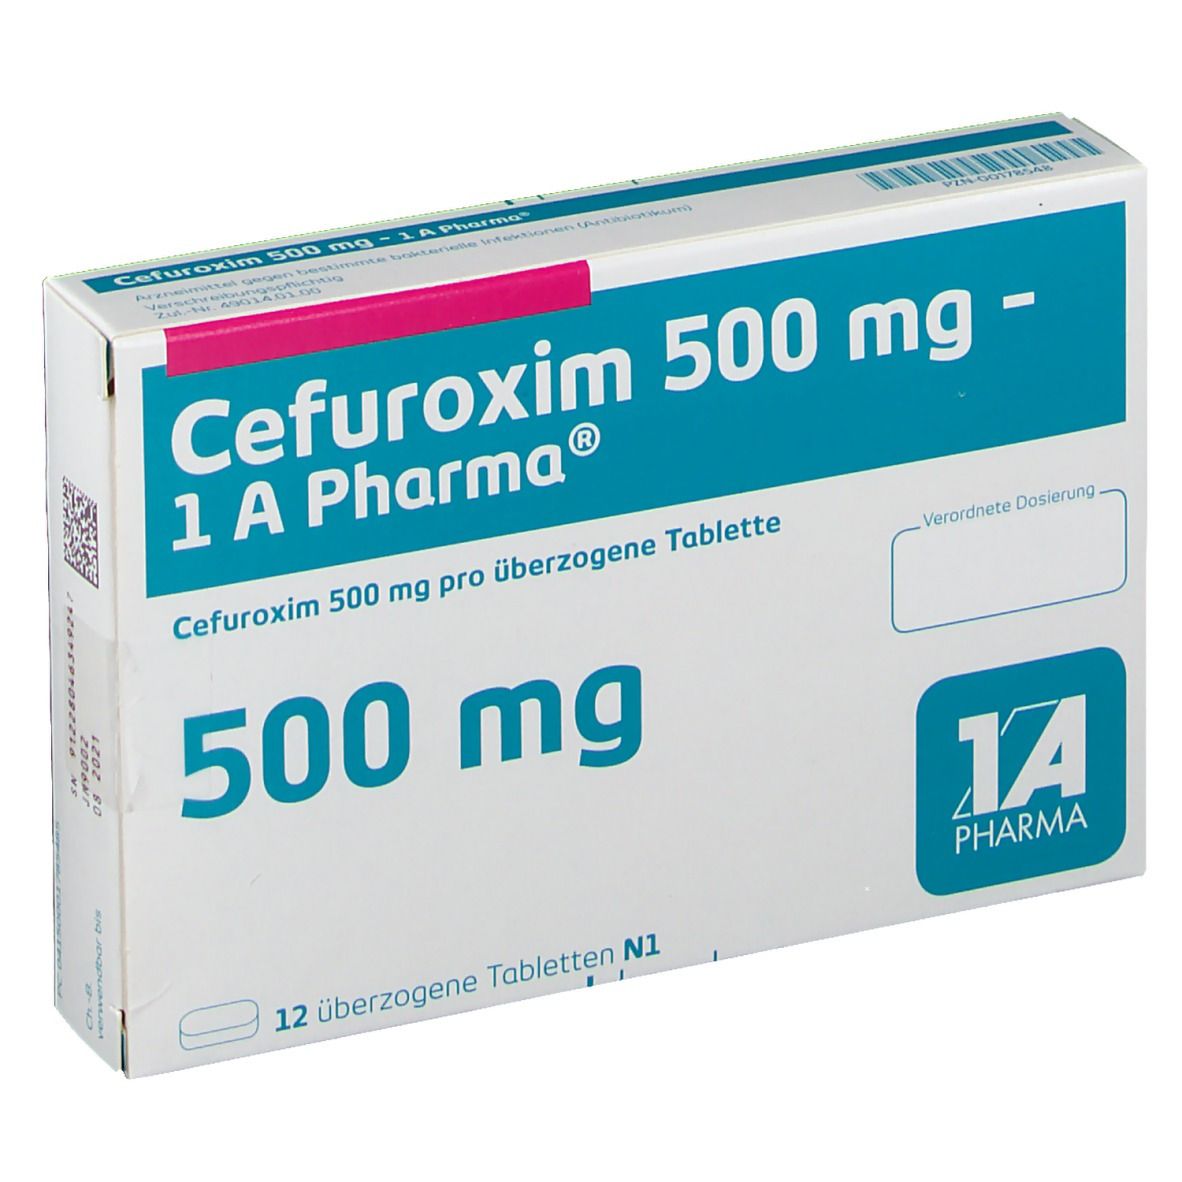 Cefuroxim 500 mg - 1 A Pharma ®.